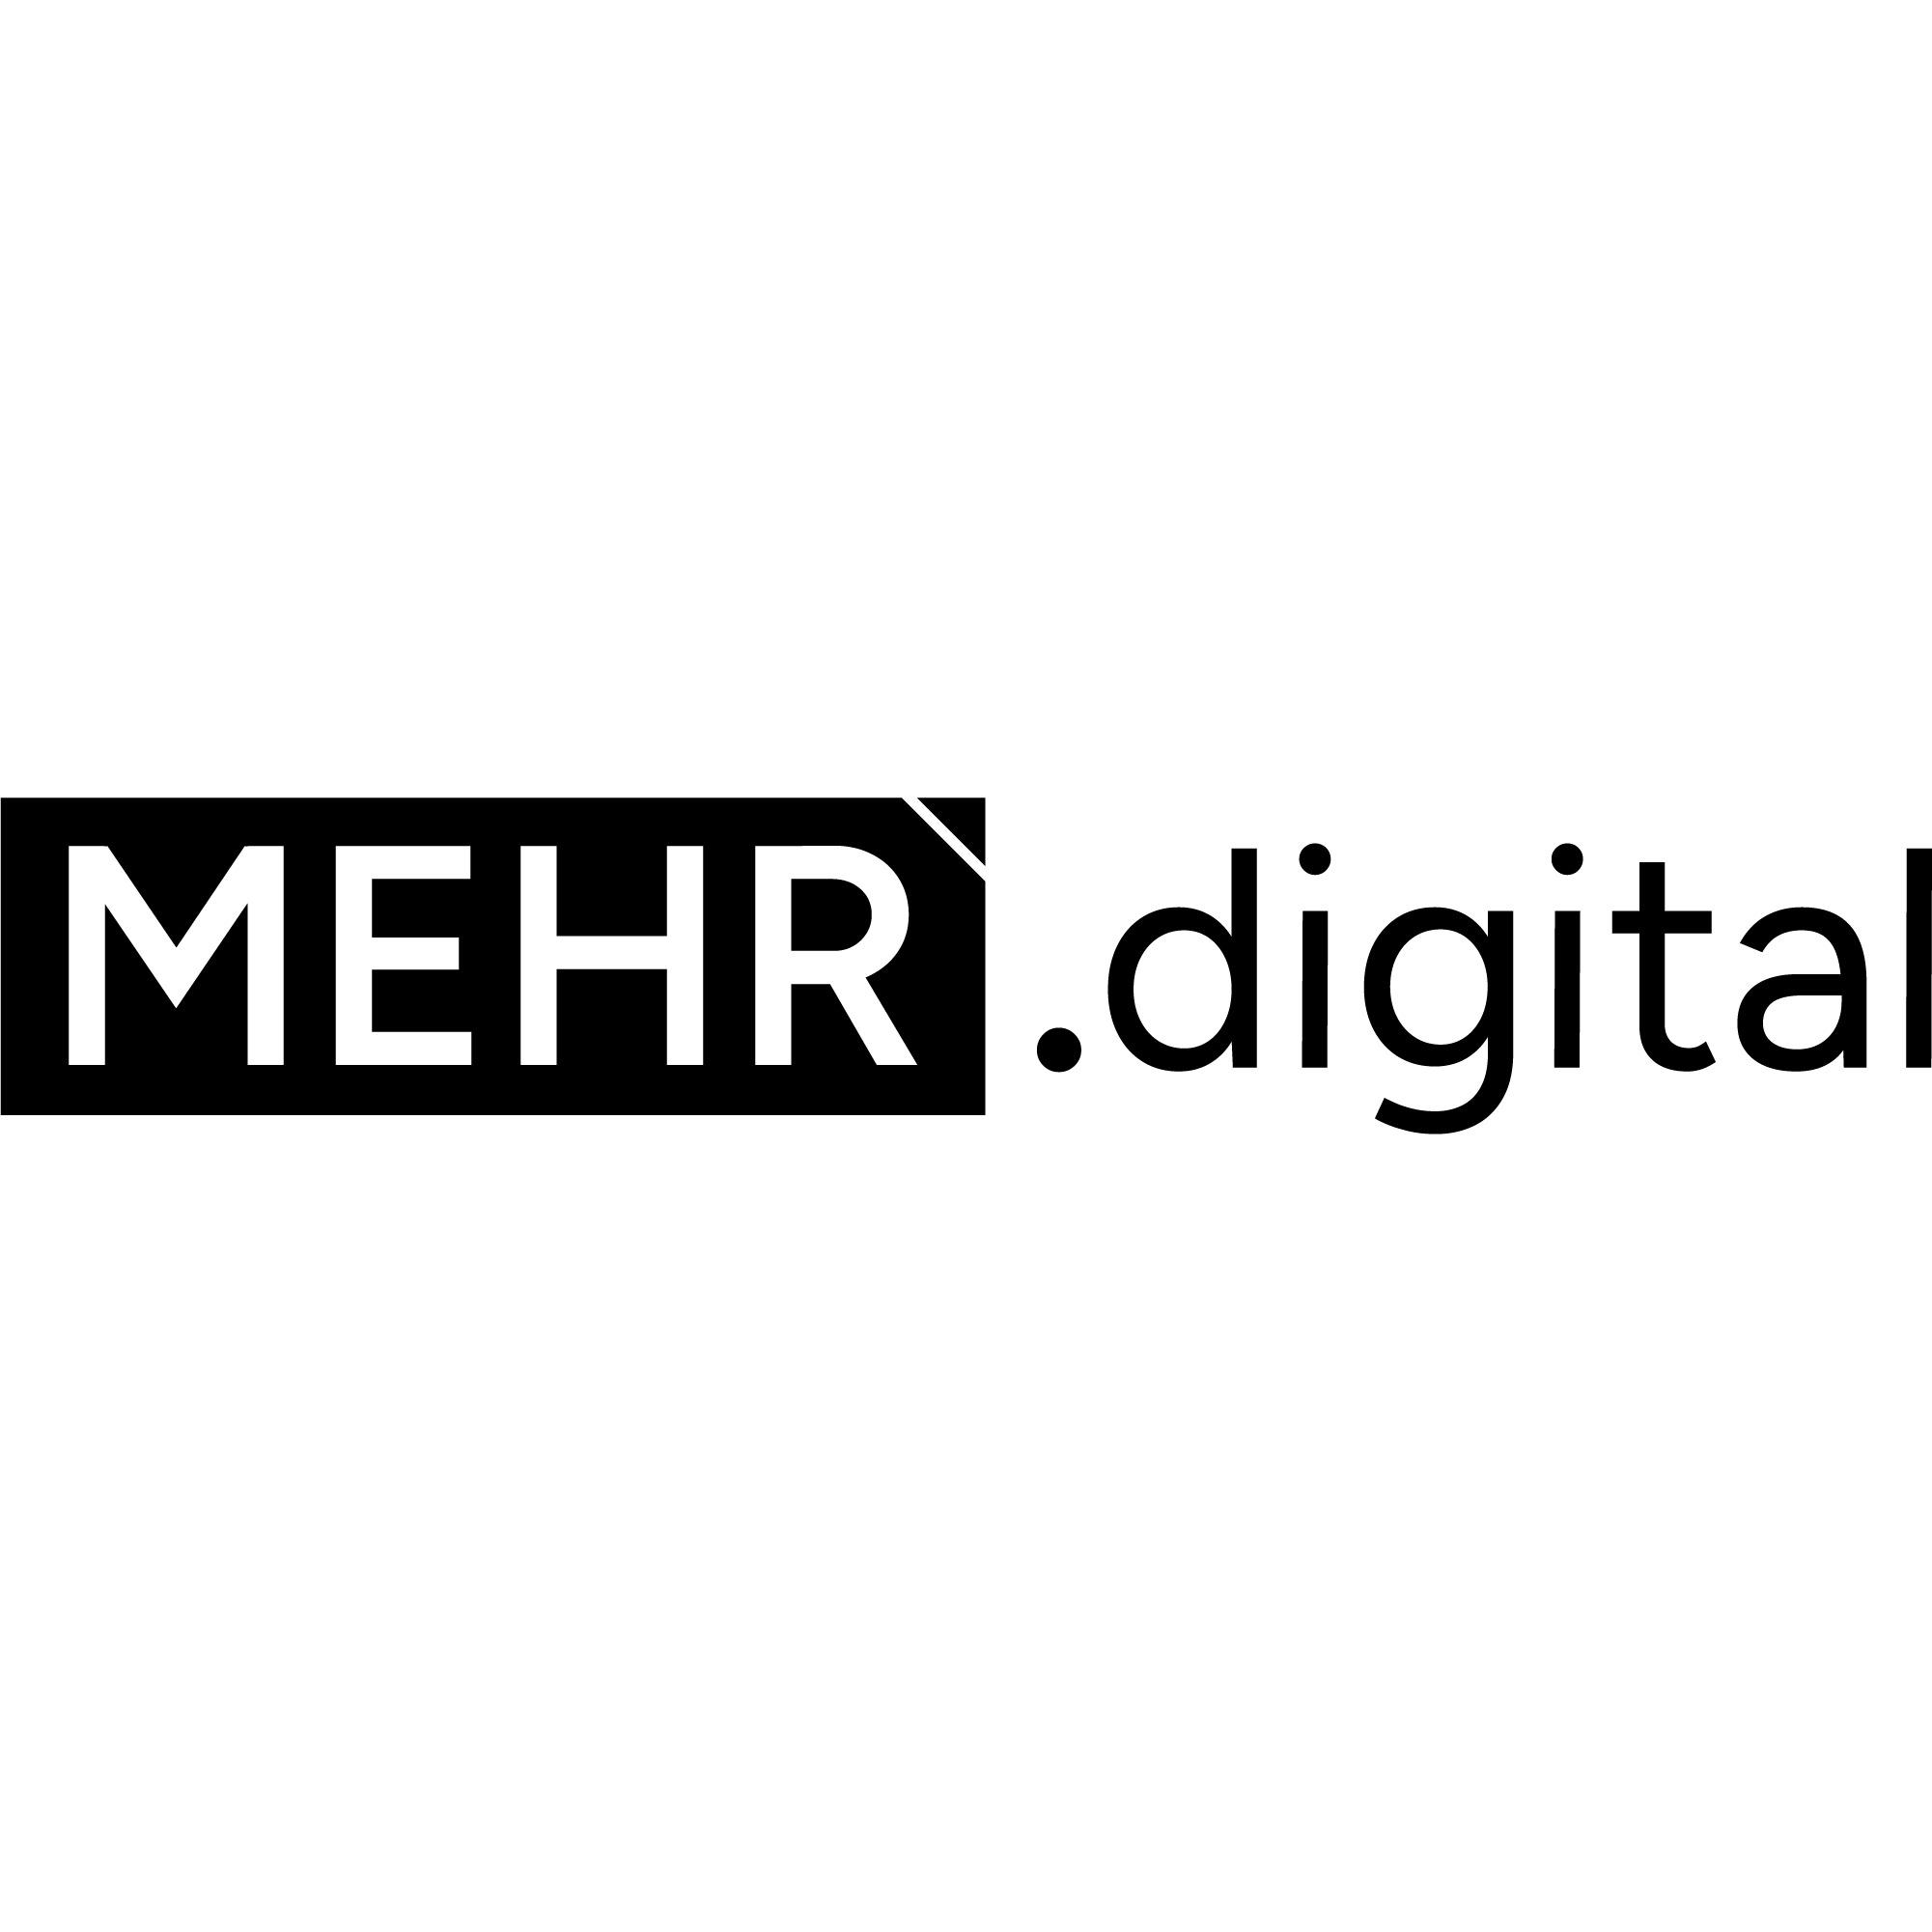 Eberling & Scholz GbR - MEHR. digital  